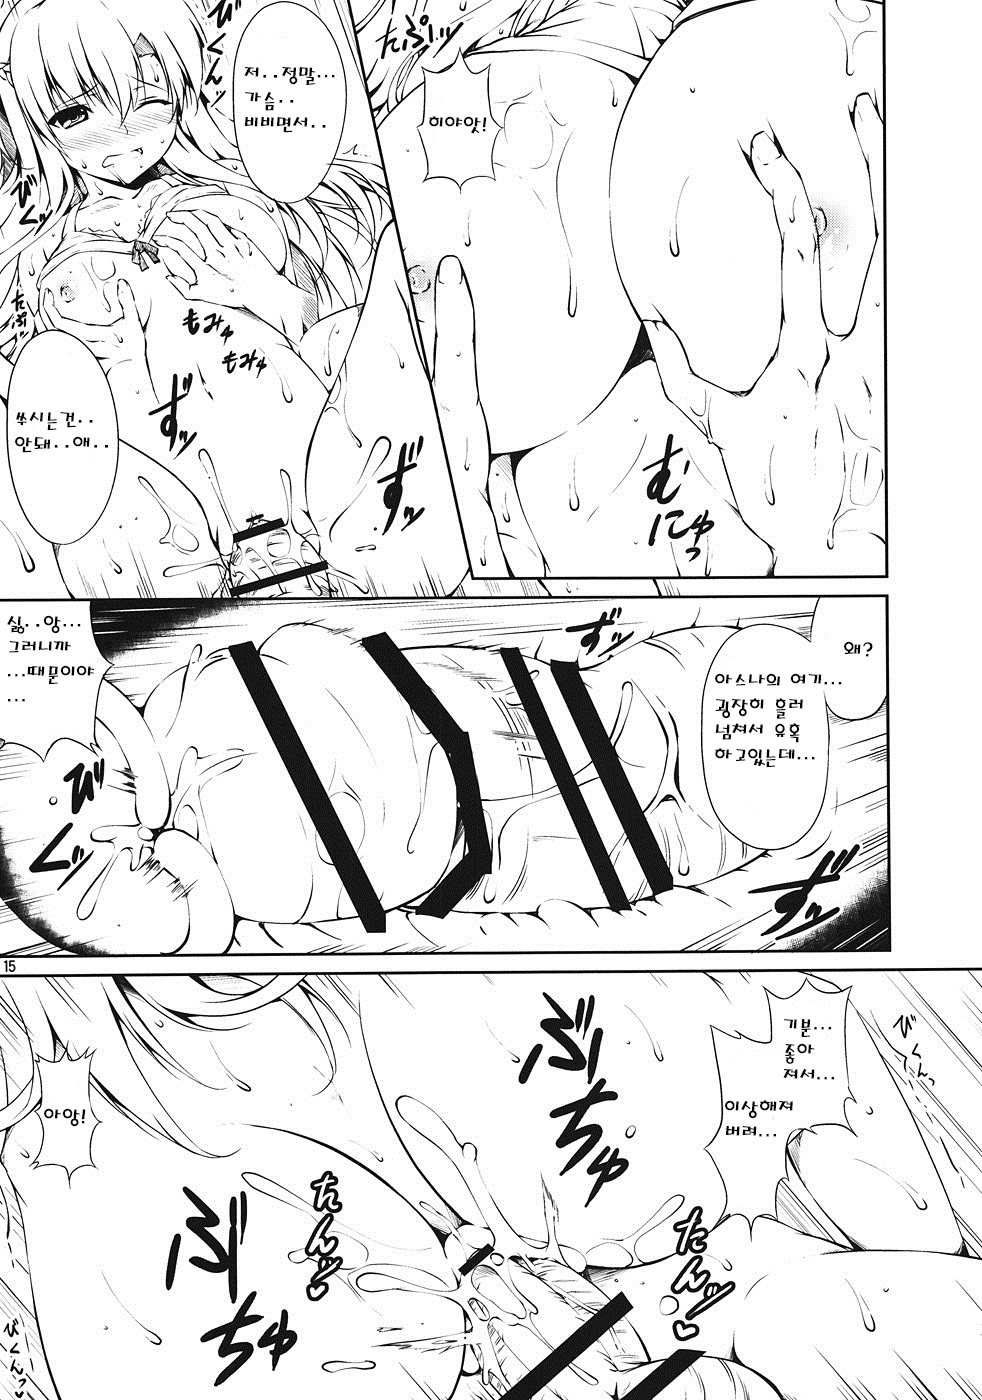 (C82) [RED CROWN (Ishigami Kazui)] Souda Asuna wa Ore no XX (Sword Art Online) (korean) (C82) [RED CROWN (石神一威)] そうだアスナは俺の×× (ソードアート・オンライン) [韓国翻訳]